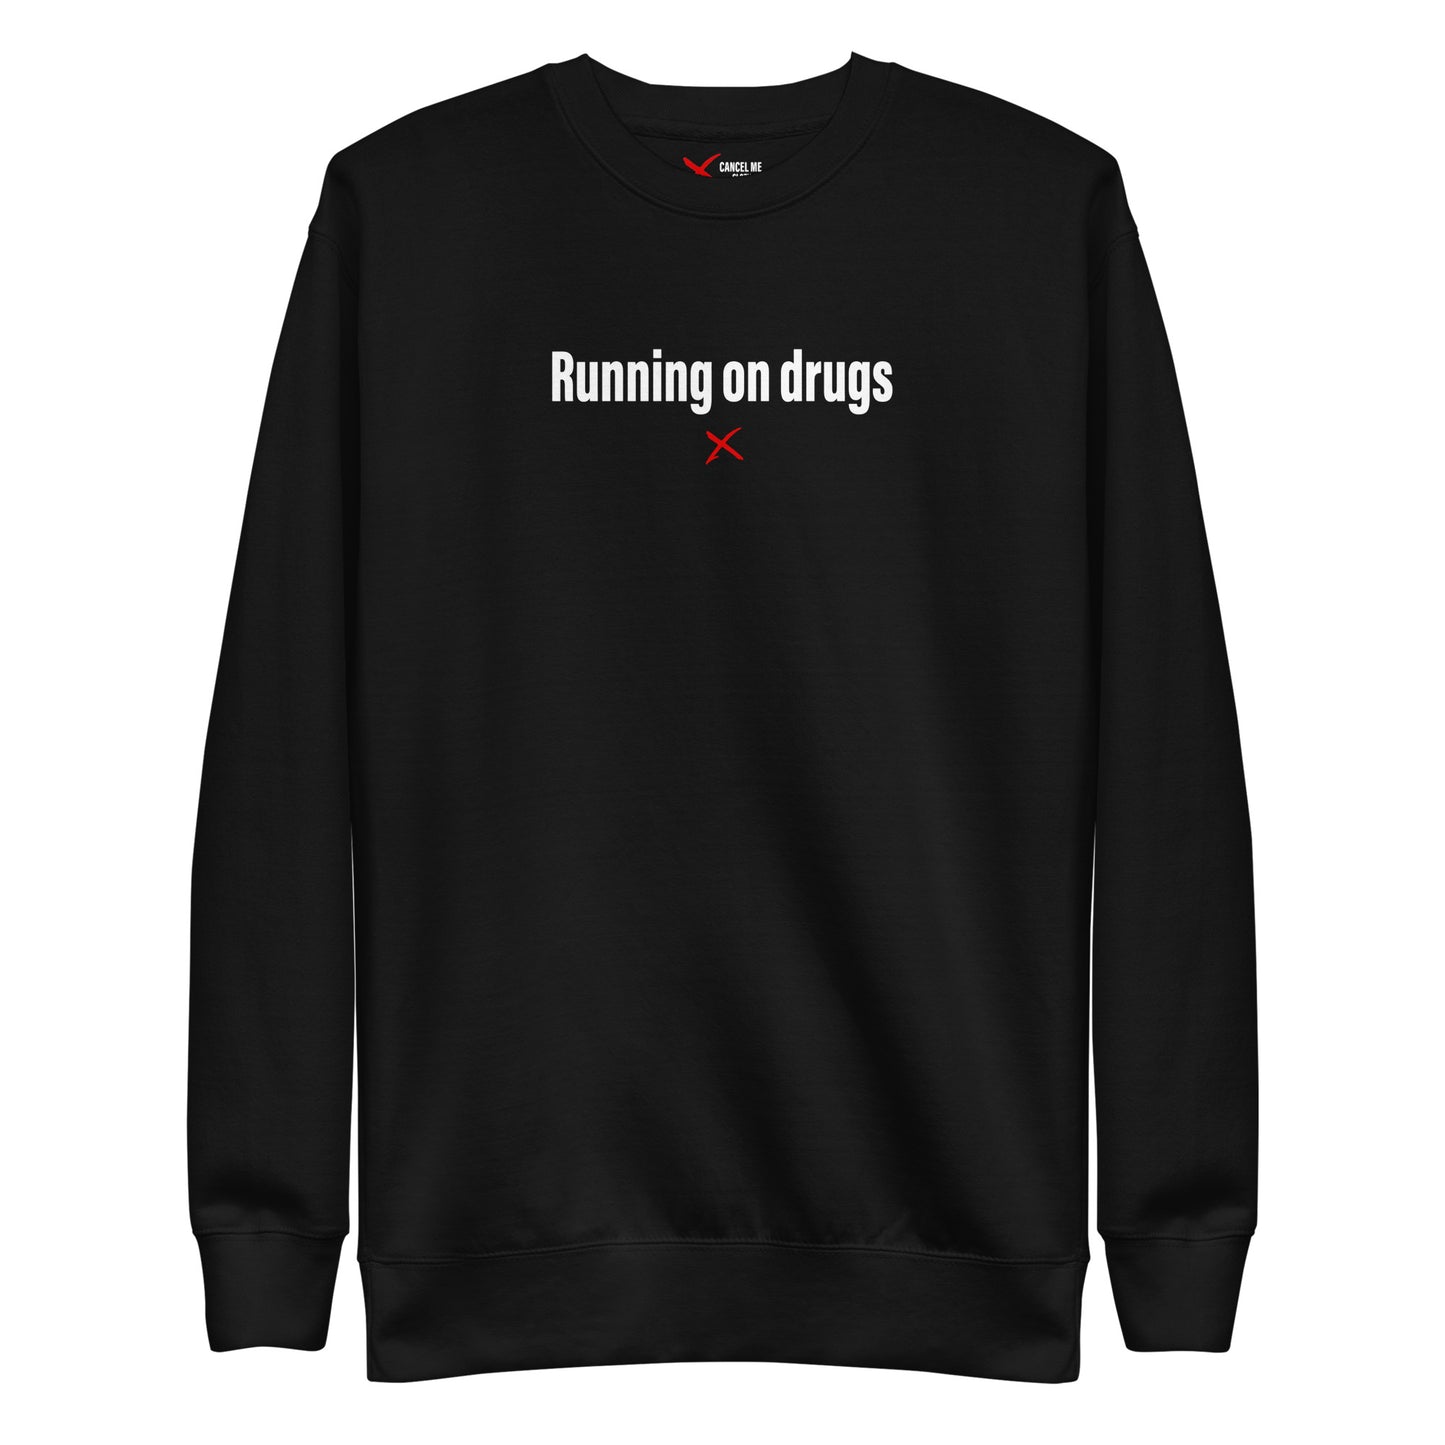 Running on drugs - Sweatshirt